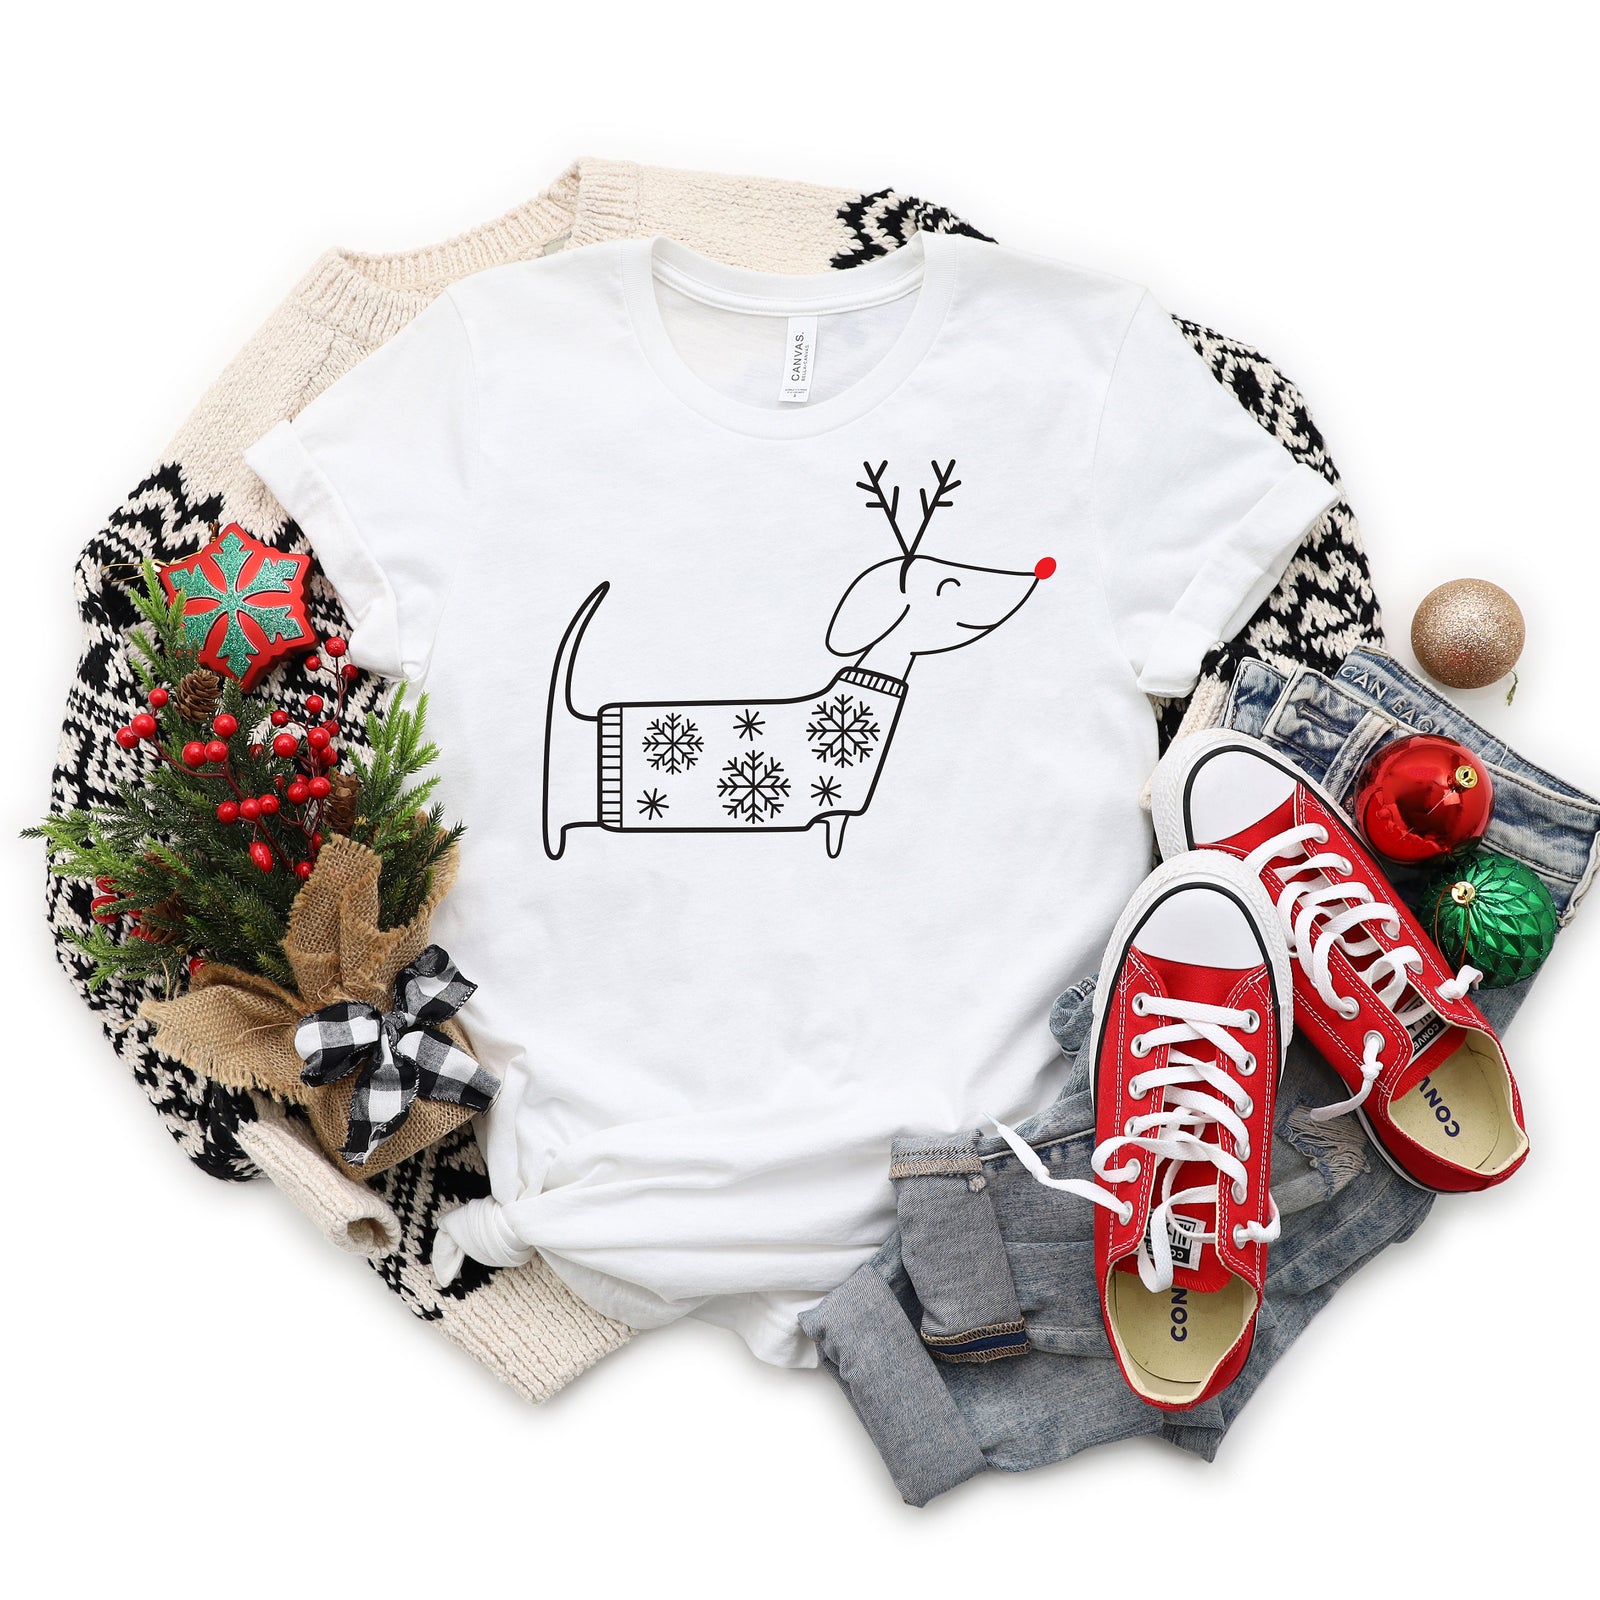 Dachshund Reindeer Christmas T Shirt - Cute Dog Lover Holiday Gift Shirt - Christmas Pet Sweater - Reindeer Dog Christmas Shirt